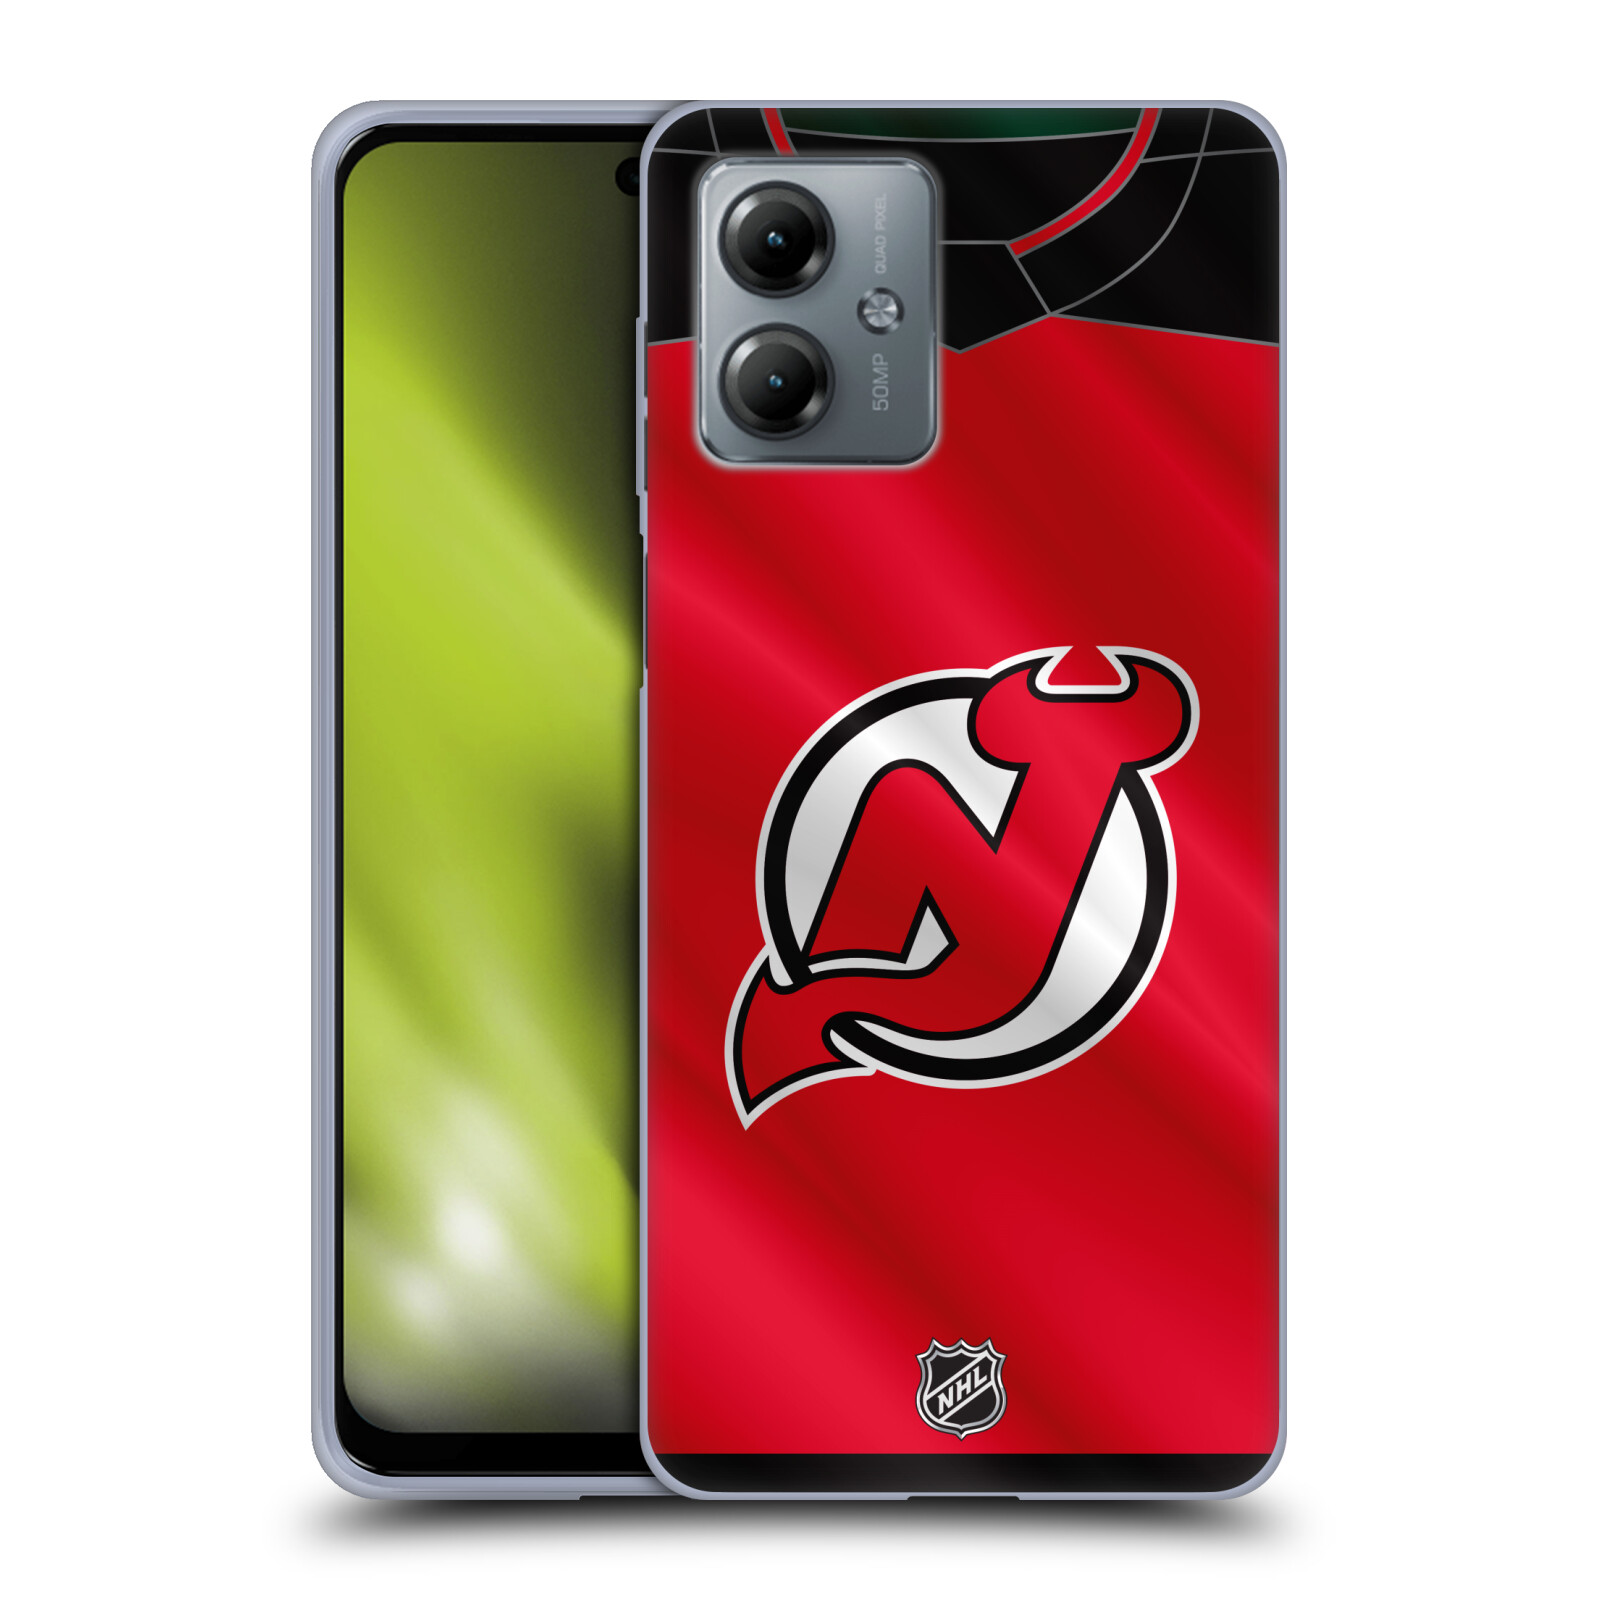 Silikonové pouzdro na mobil Motorola Moto G14 - NHL - Dres New Jersey Devils (Silikonový kryt, obal, pouzdro na mobilní telefon Motorola Moto G14 s licencovaným motivem NHL - Dres New Jersey Devils)